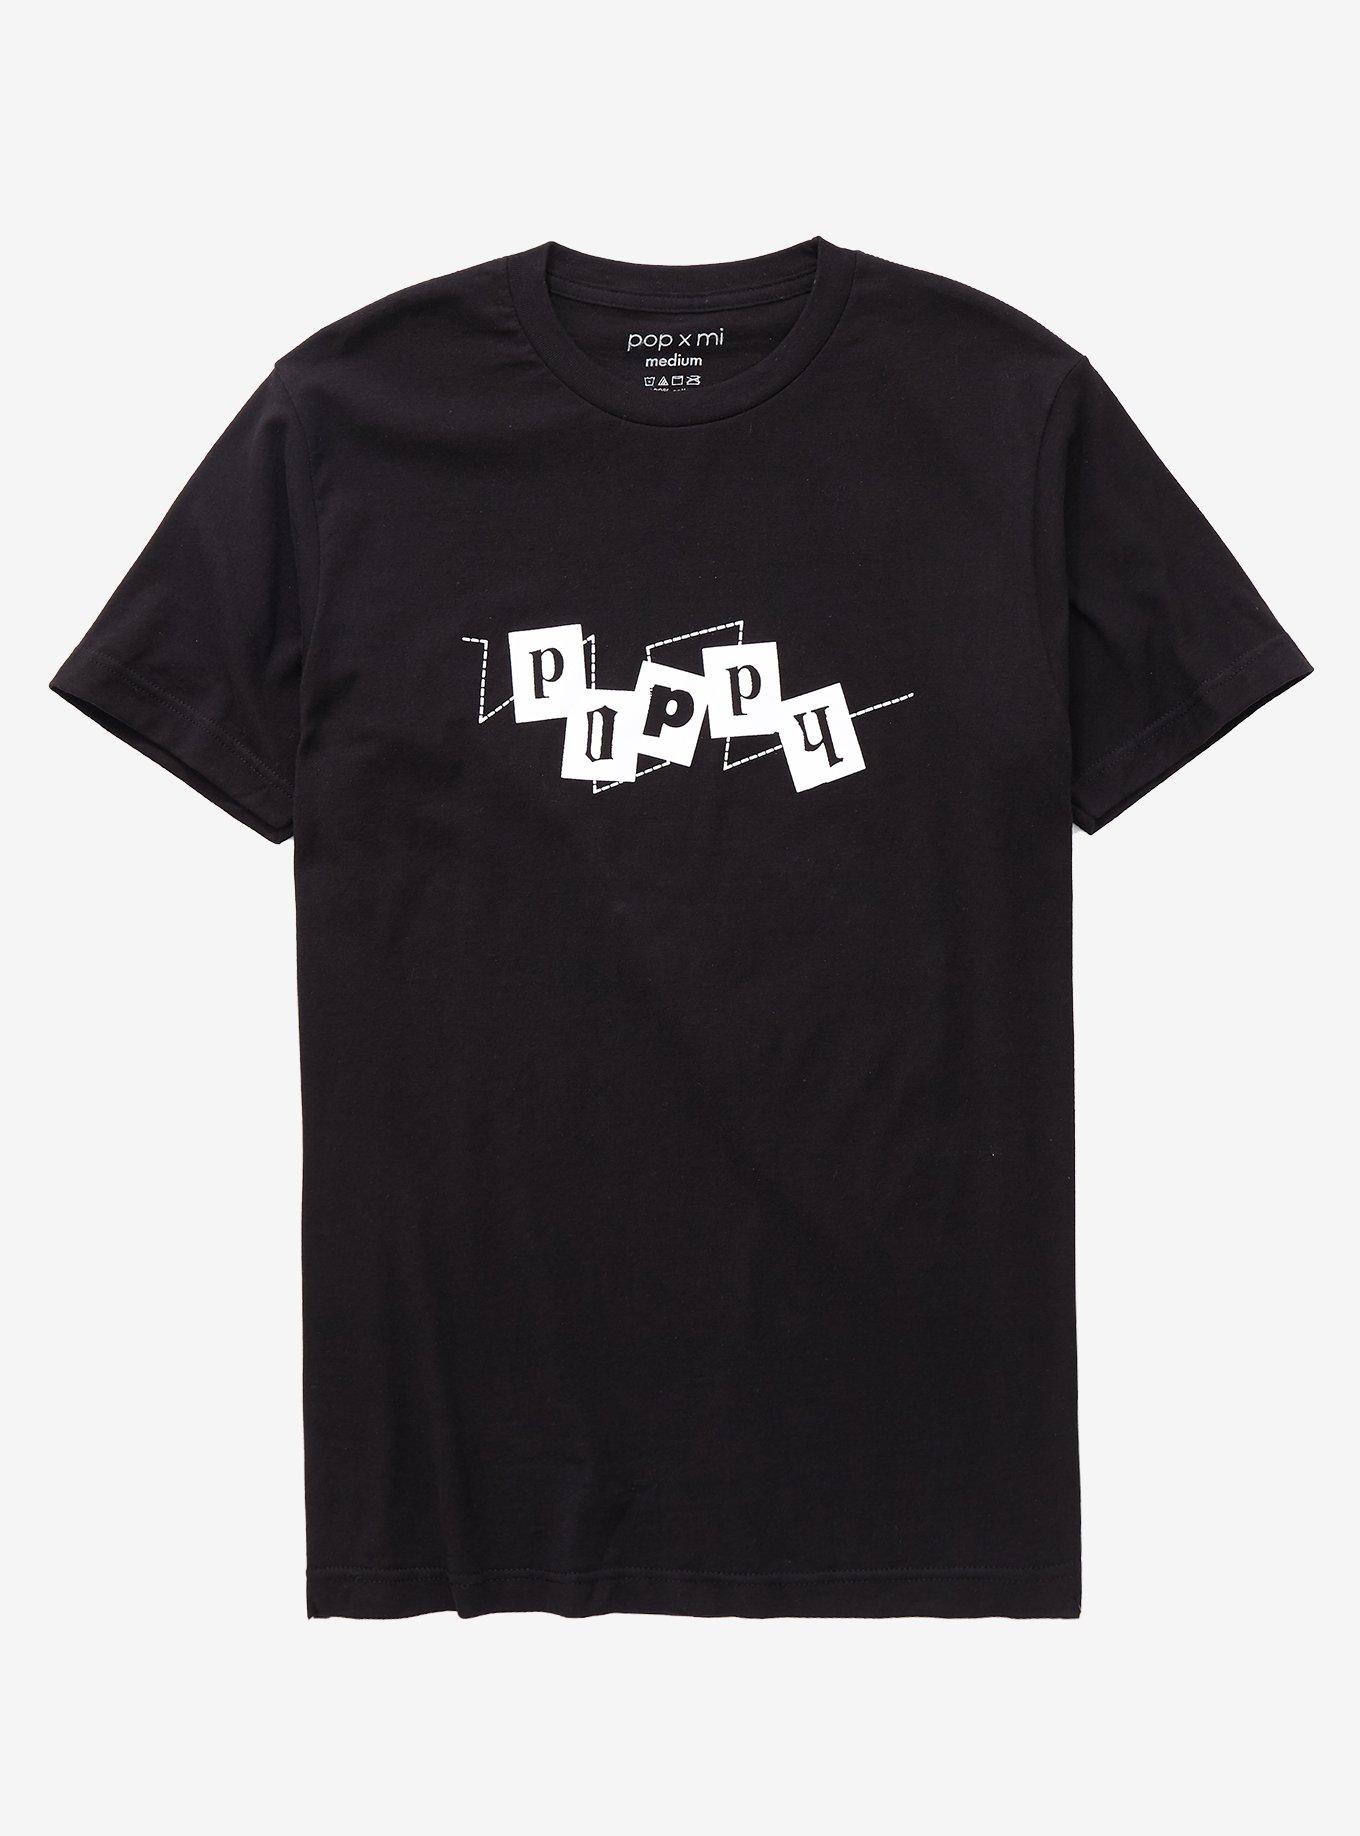 Poppy Flux Album T-Shirt, BLACK, hi-res